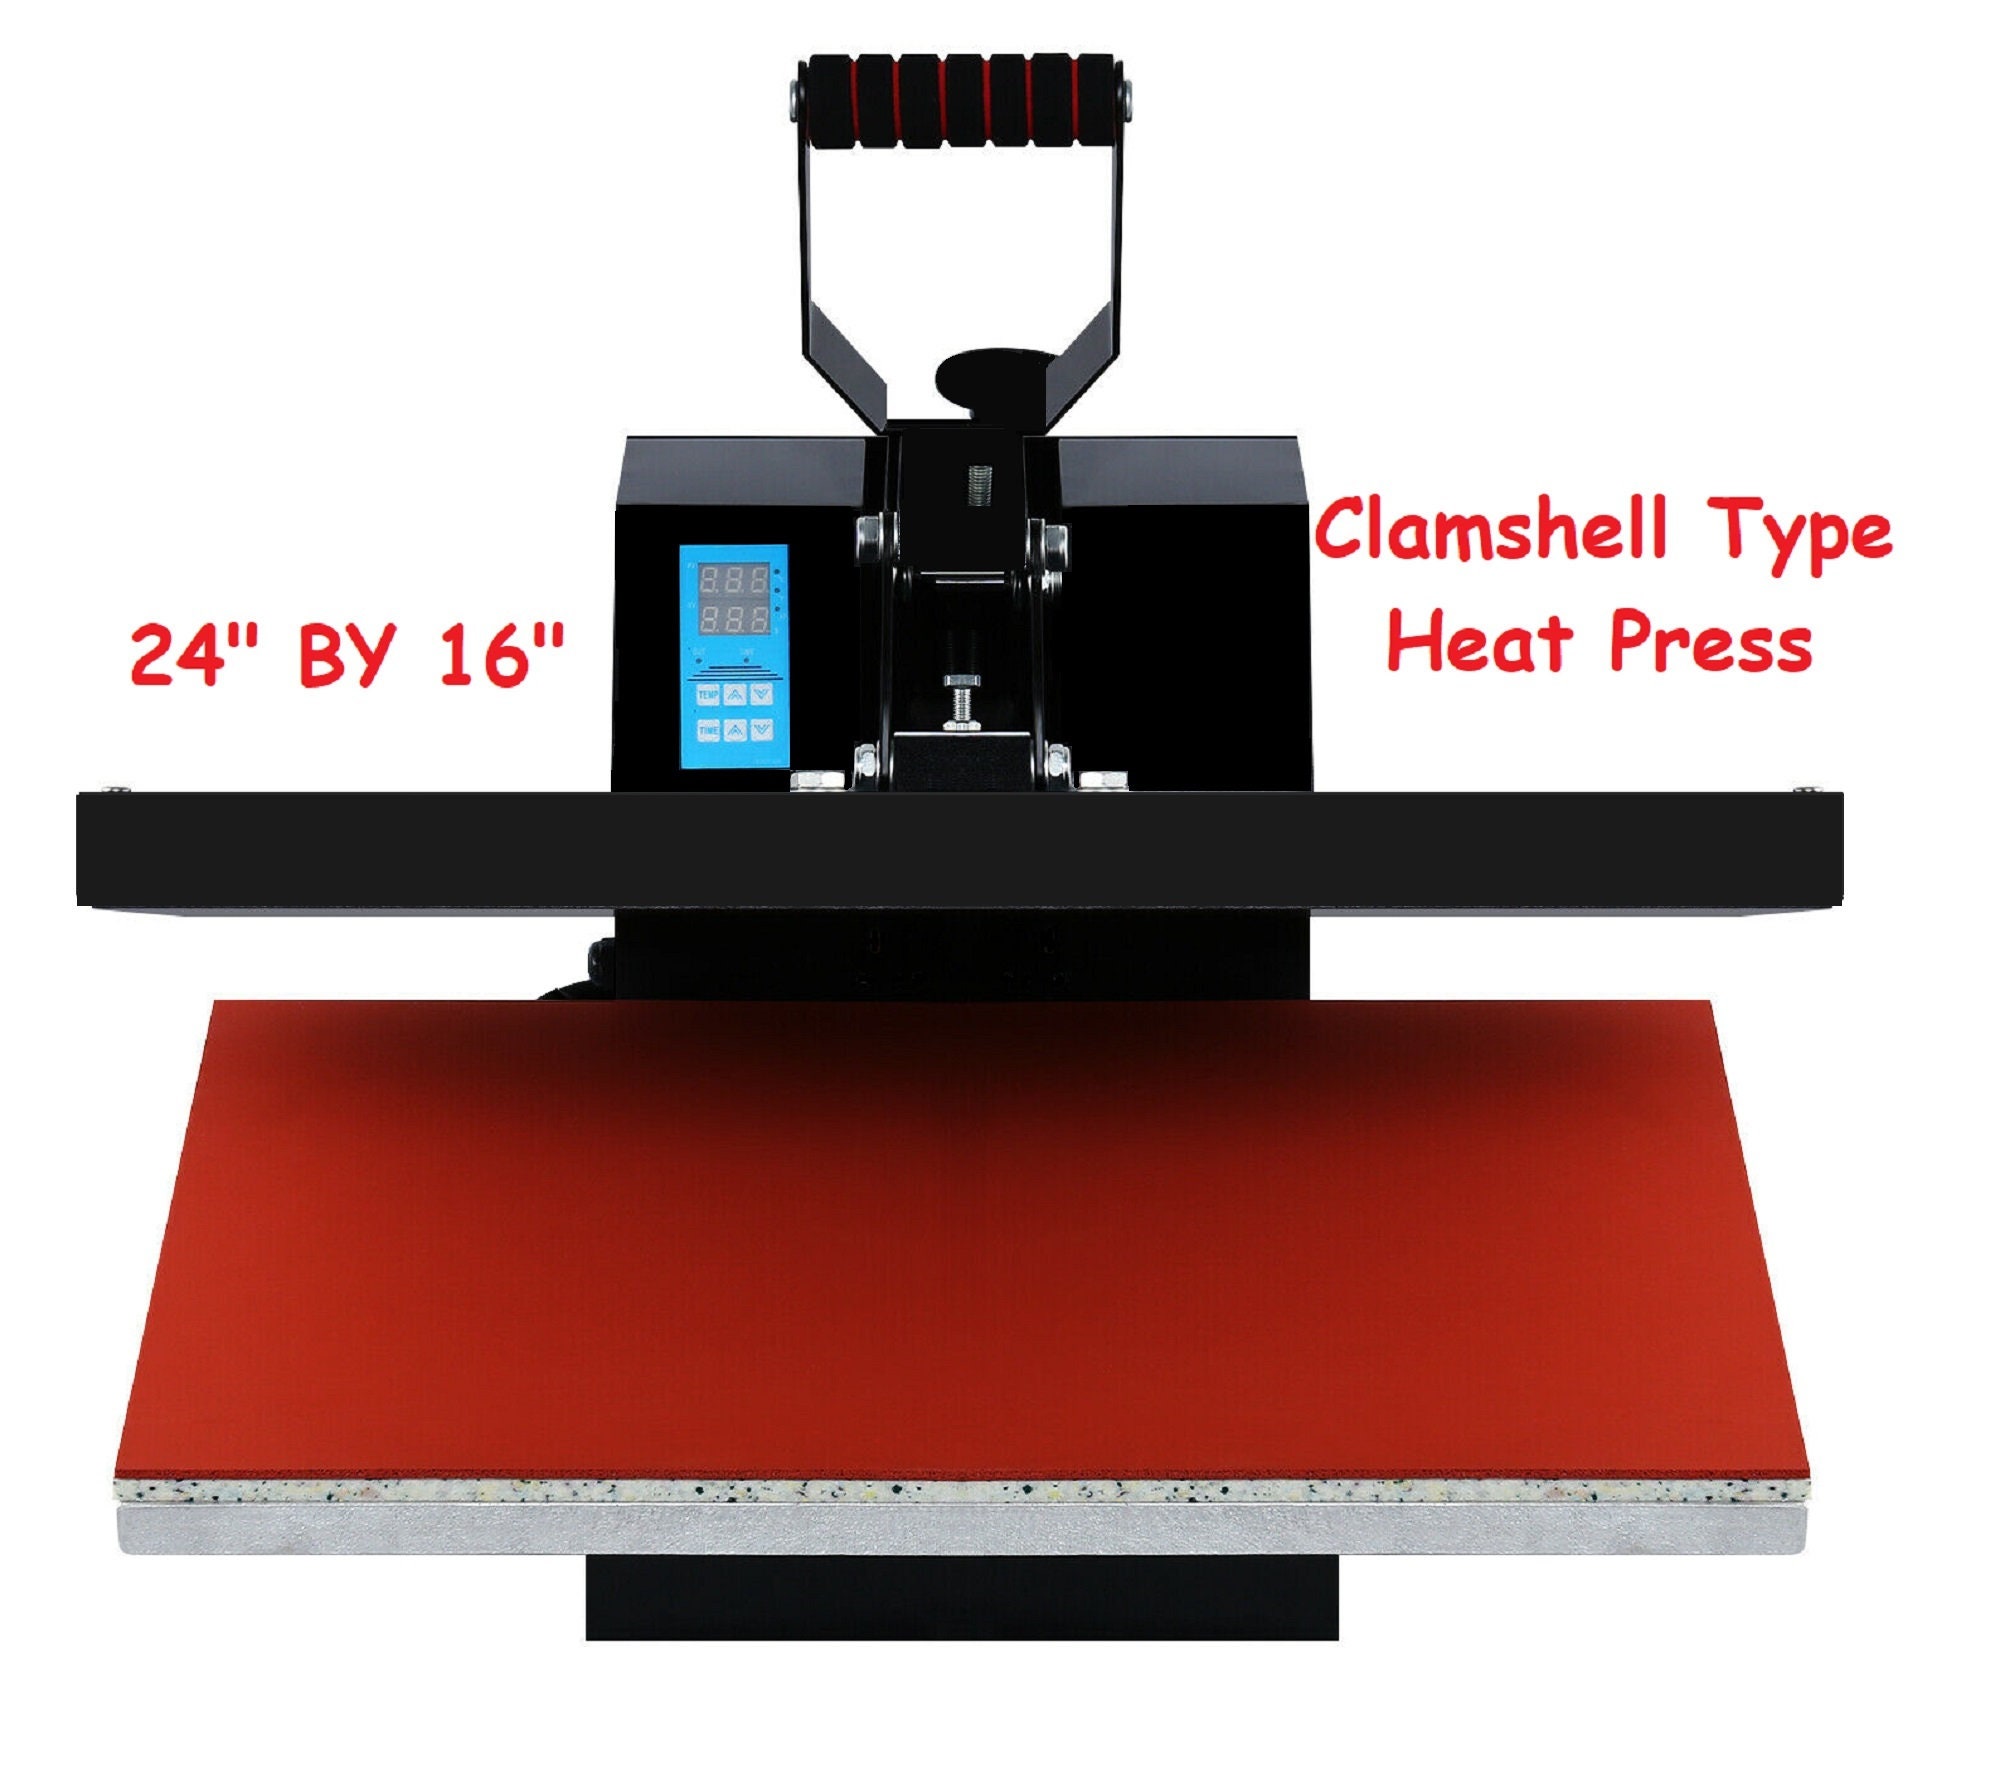 ShirtMate 15x15 heat press